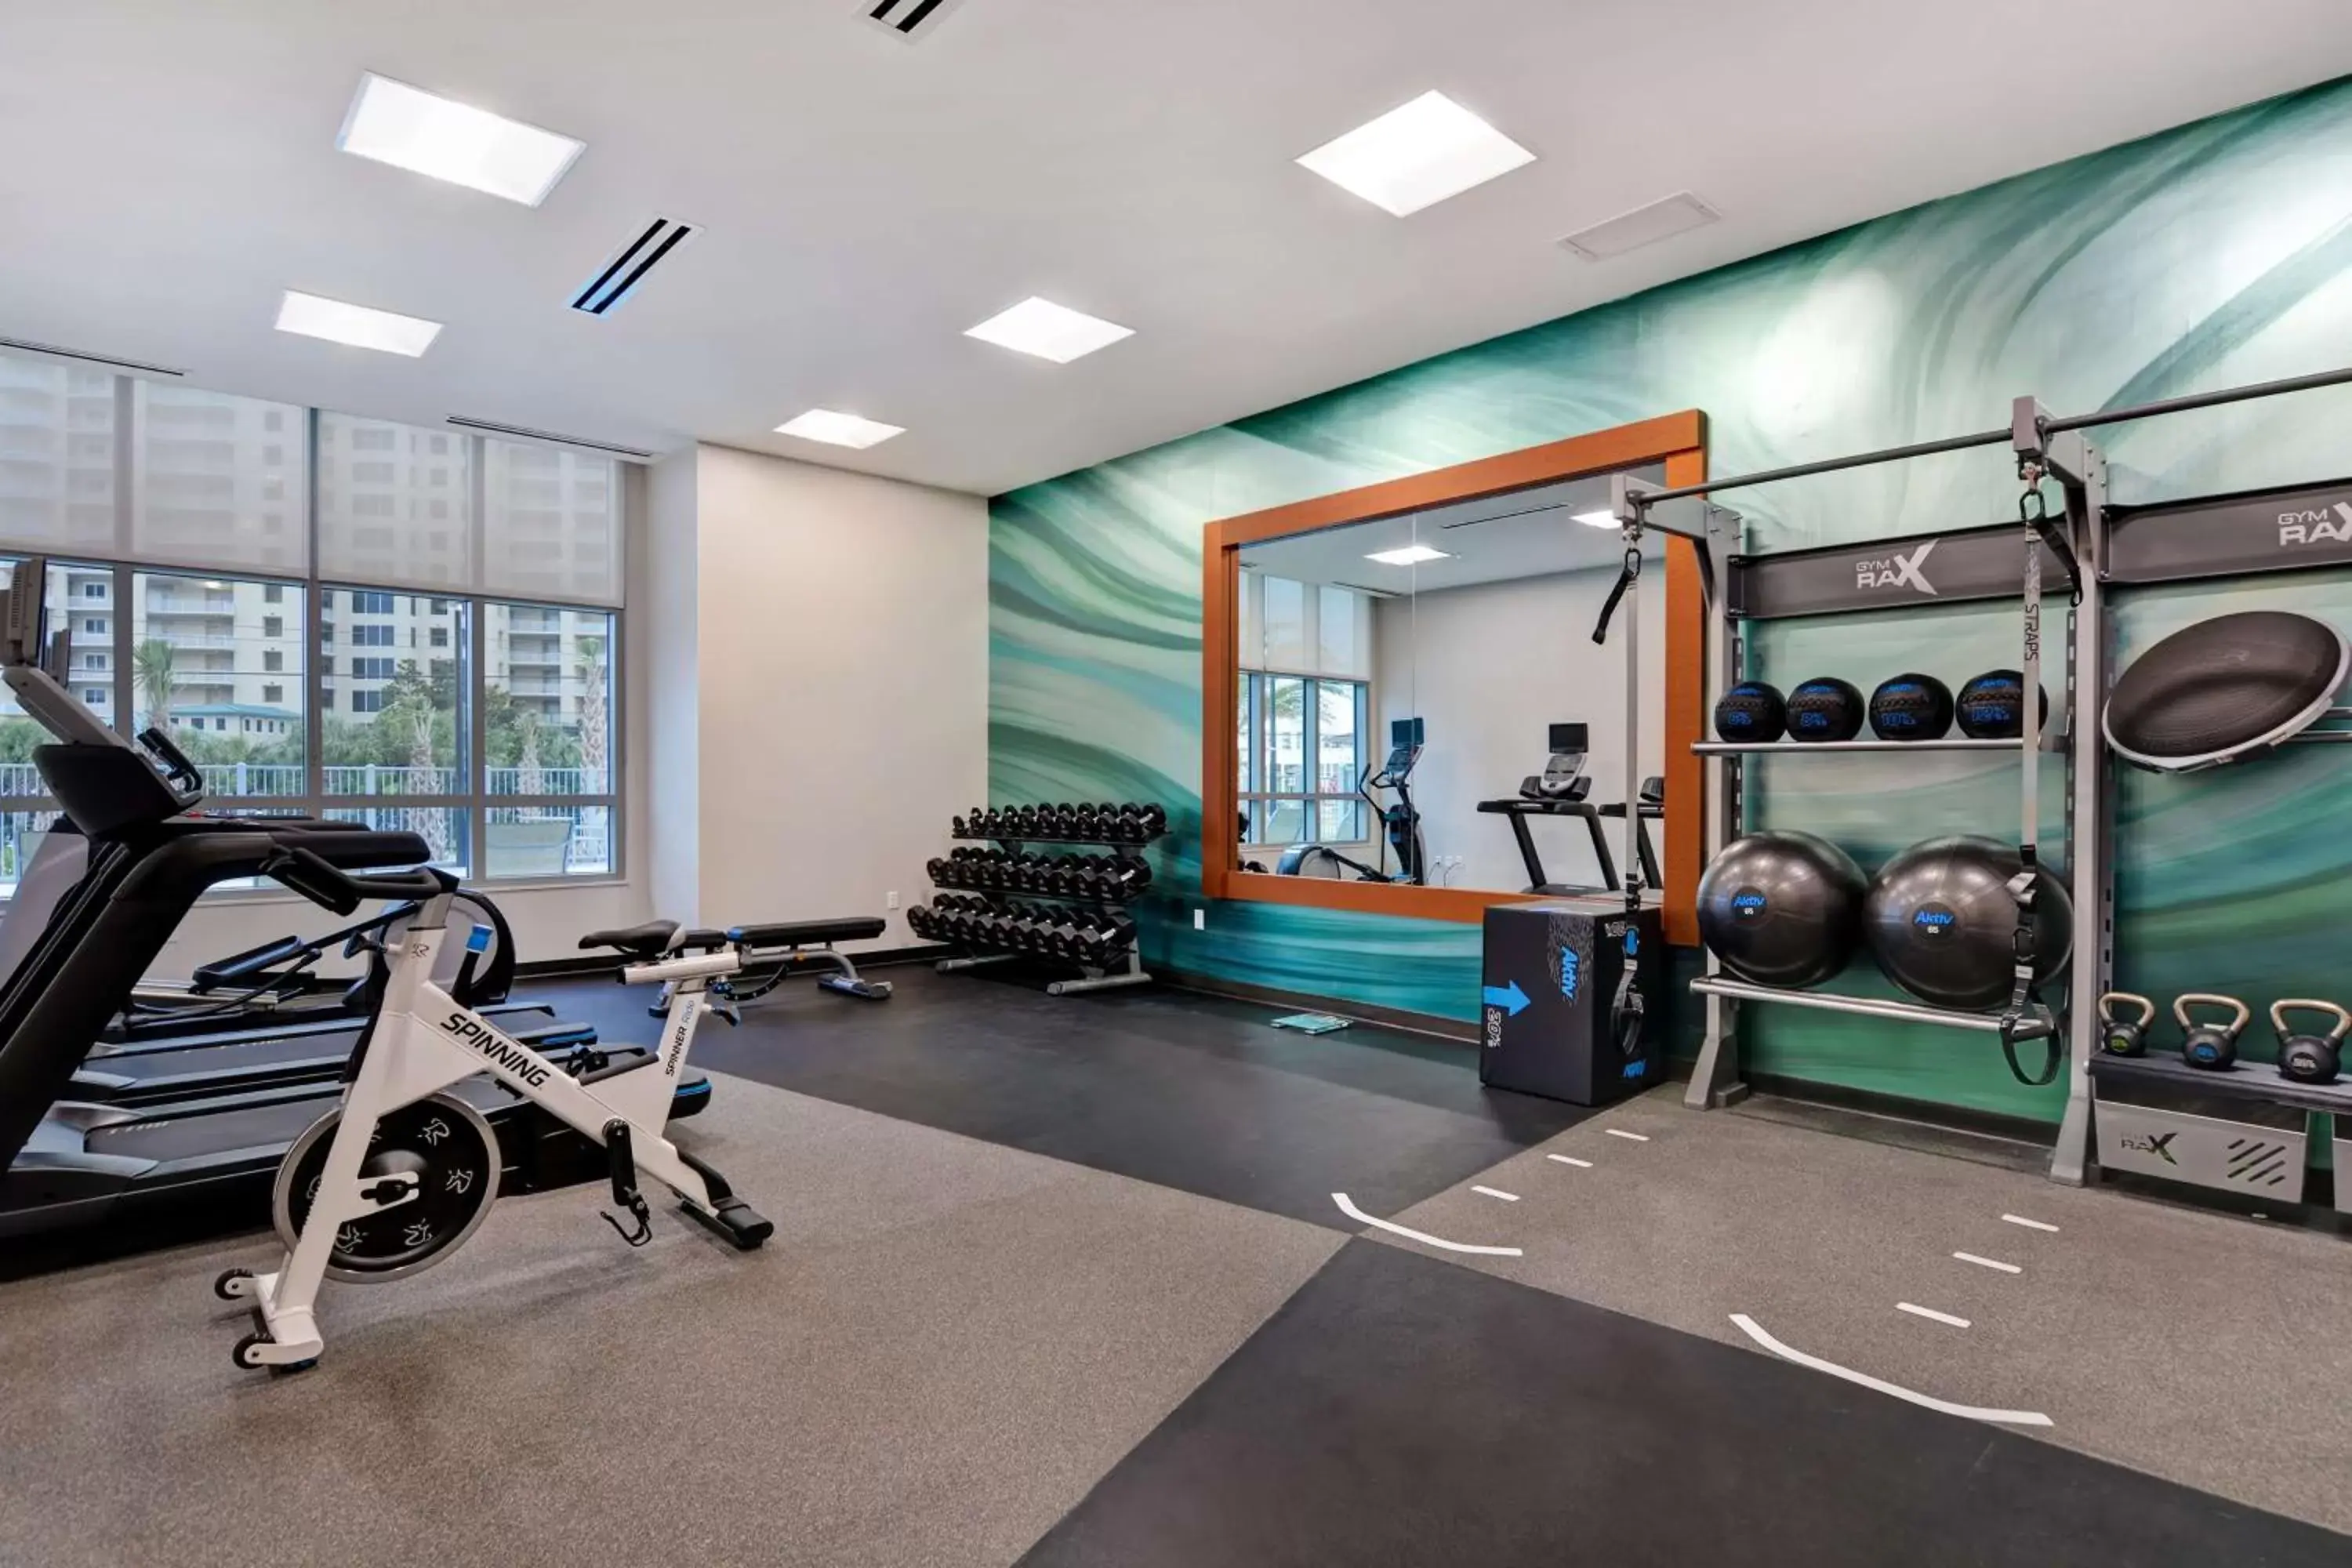 Fitness centre/facilities, Fitness Center/Facilities in Hilton Garden Inn Destin Miramar Beach, Fl